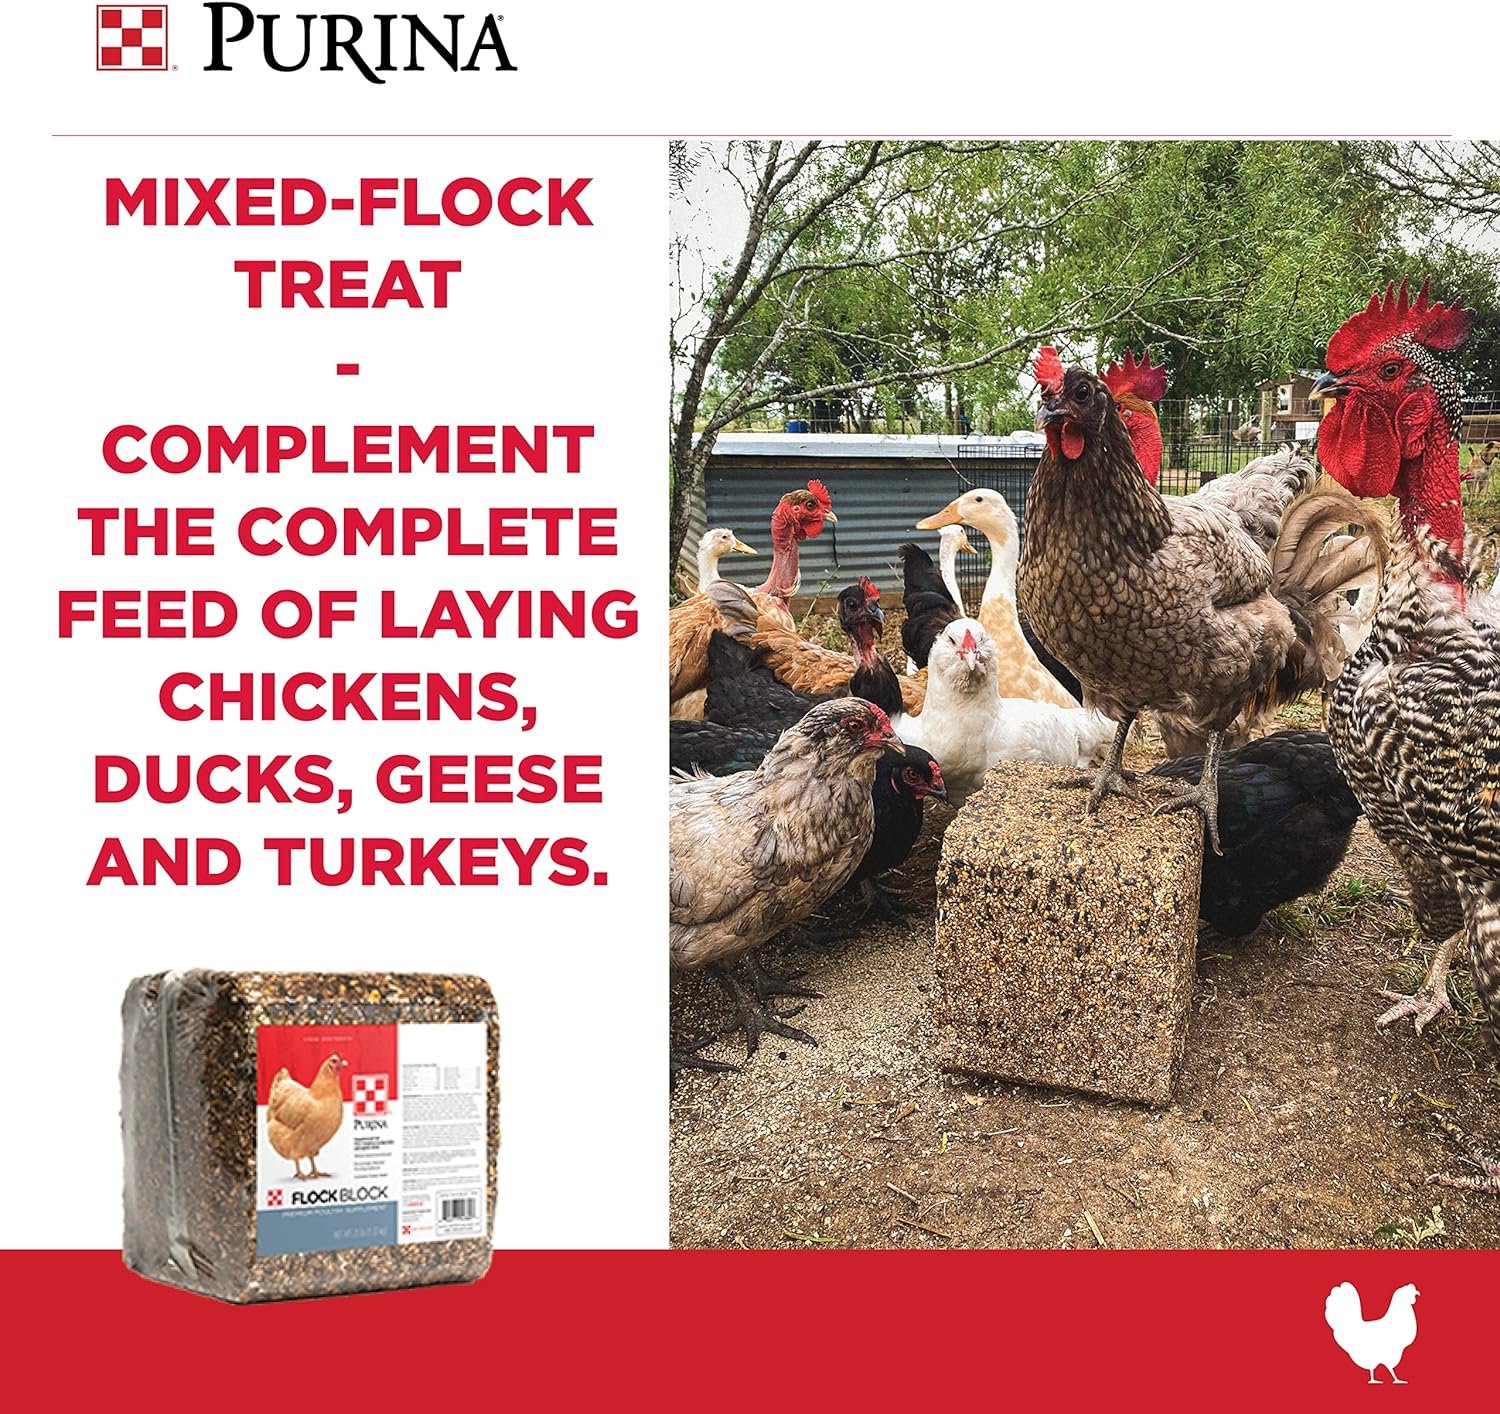 Purina| Flock Block Supplement | 25 Pound (25 lb.) Block